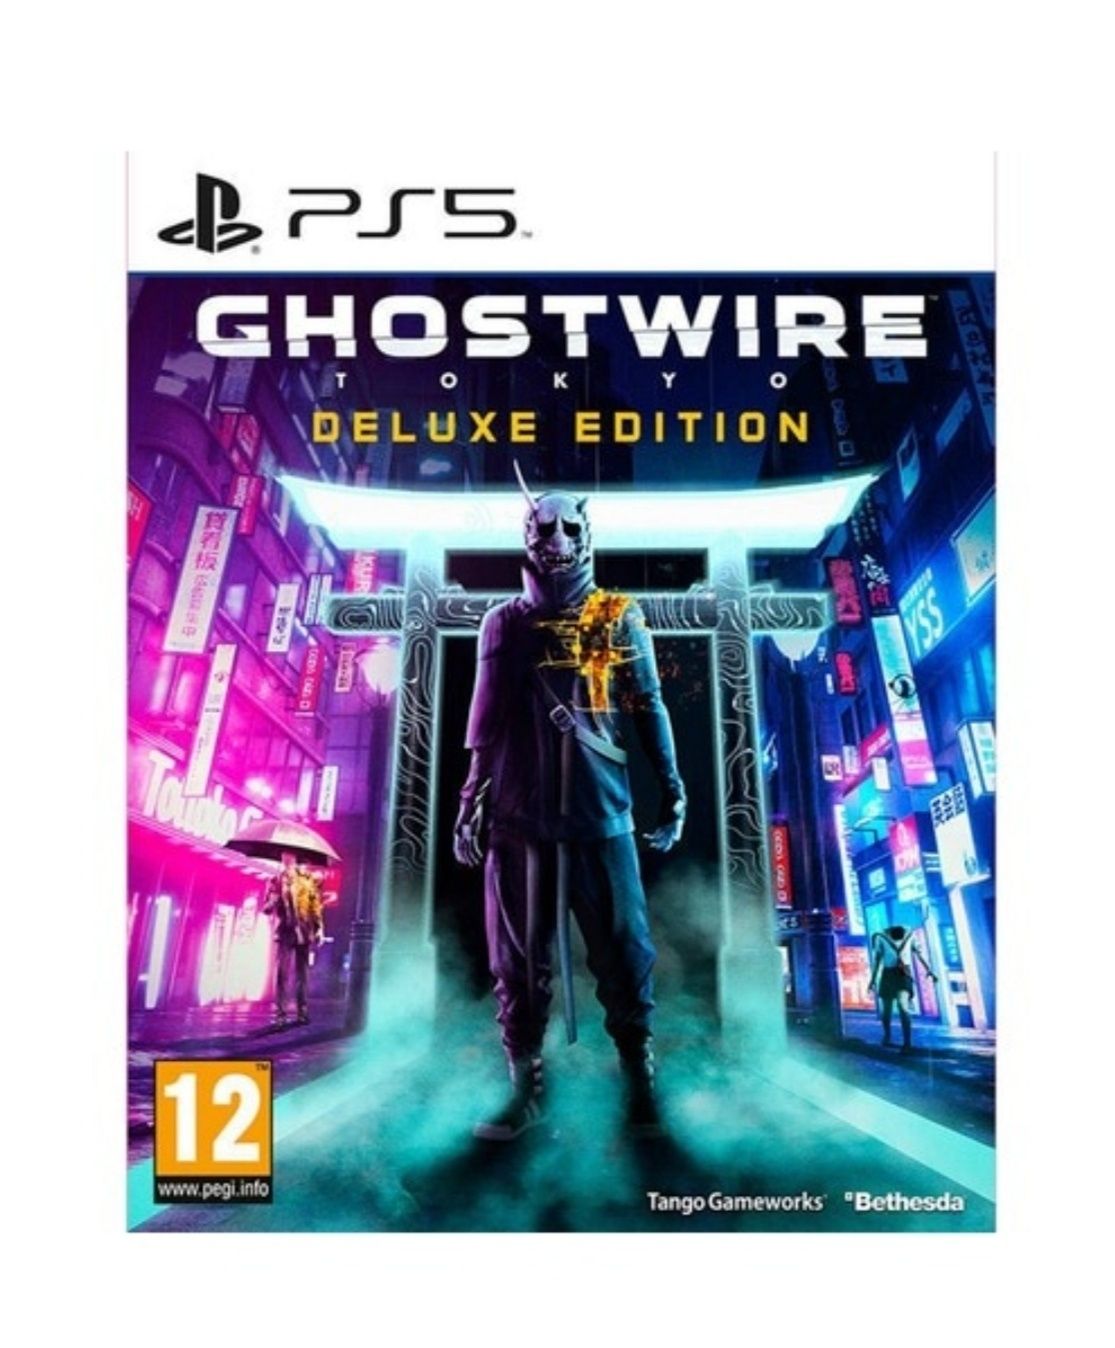 Ghostwire Tokyo - Deluxe Edition - PS5 - PlayStation 5 (selado)